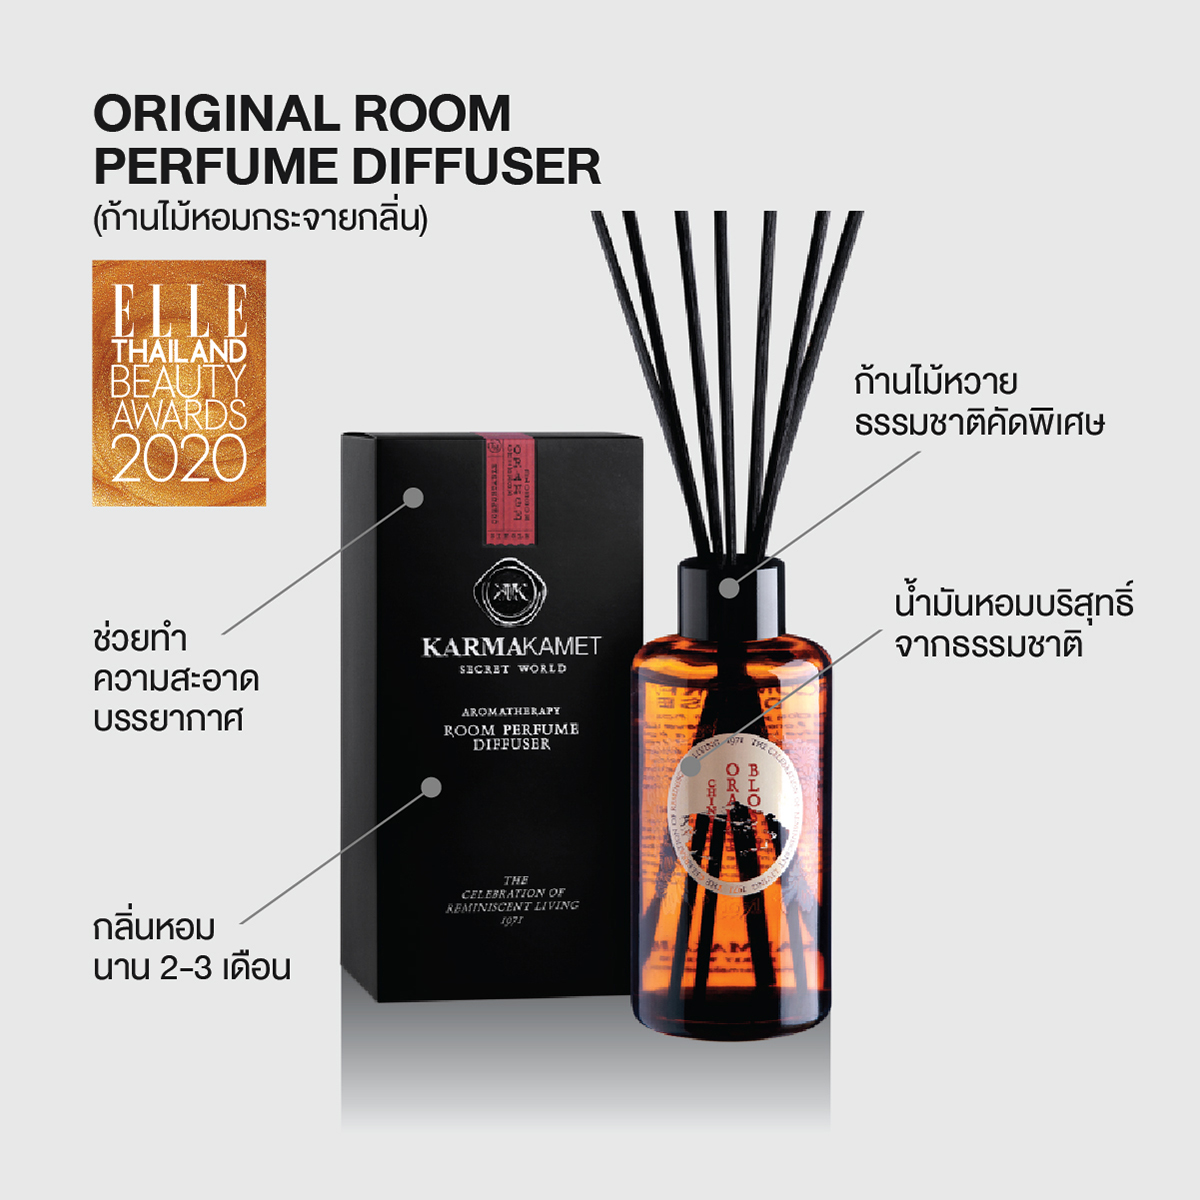 KARMAKAMET Original Room Perfume Diffuser / Single คามาคาเมต ก้านไม้หอมกระจายกลิ่น น้ำหอมบ้าน ก้านไม้หอม น้ำหอมปรับอากาศ บ้านหอม  กลิ่น Mossปริมาณ (มล.) 200